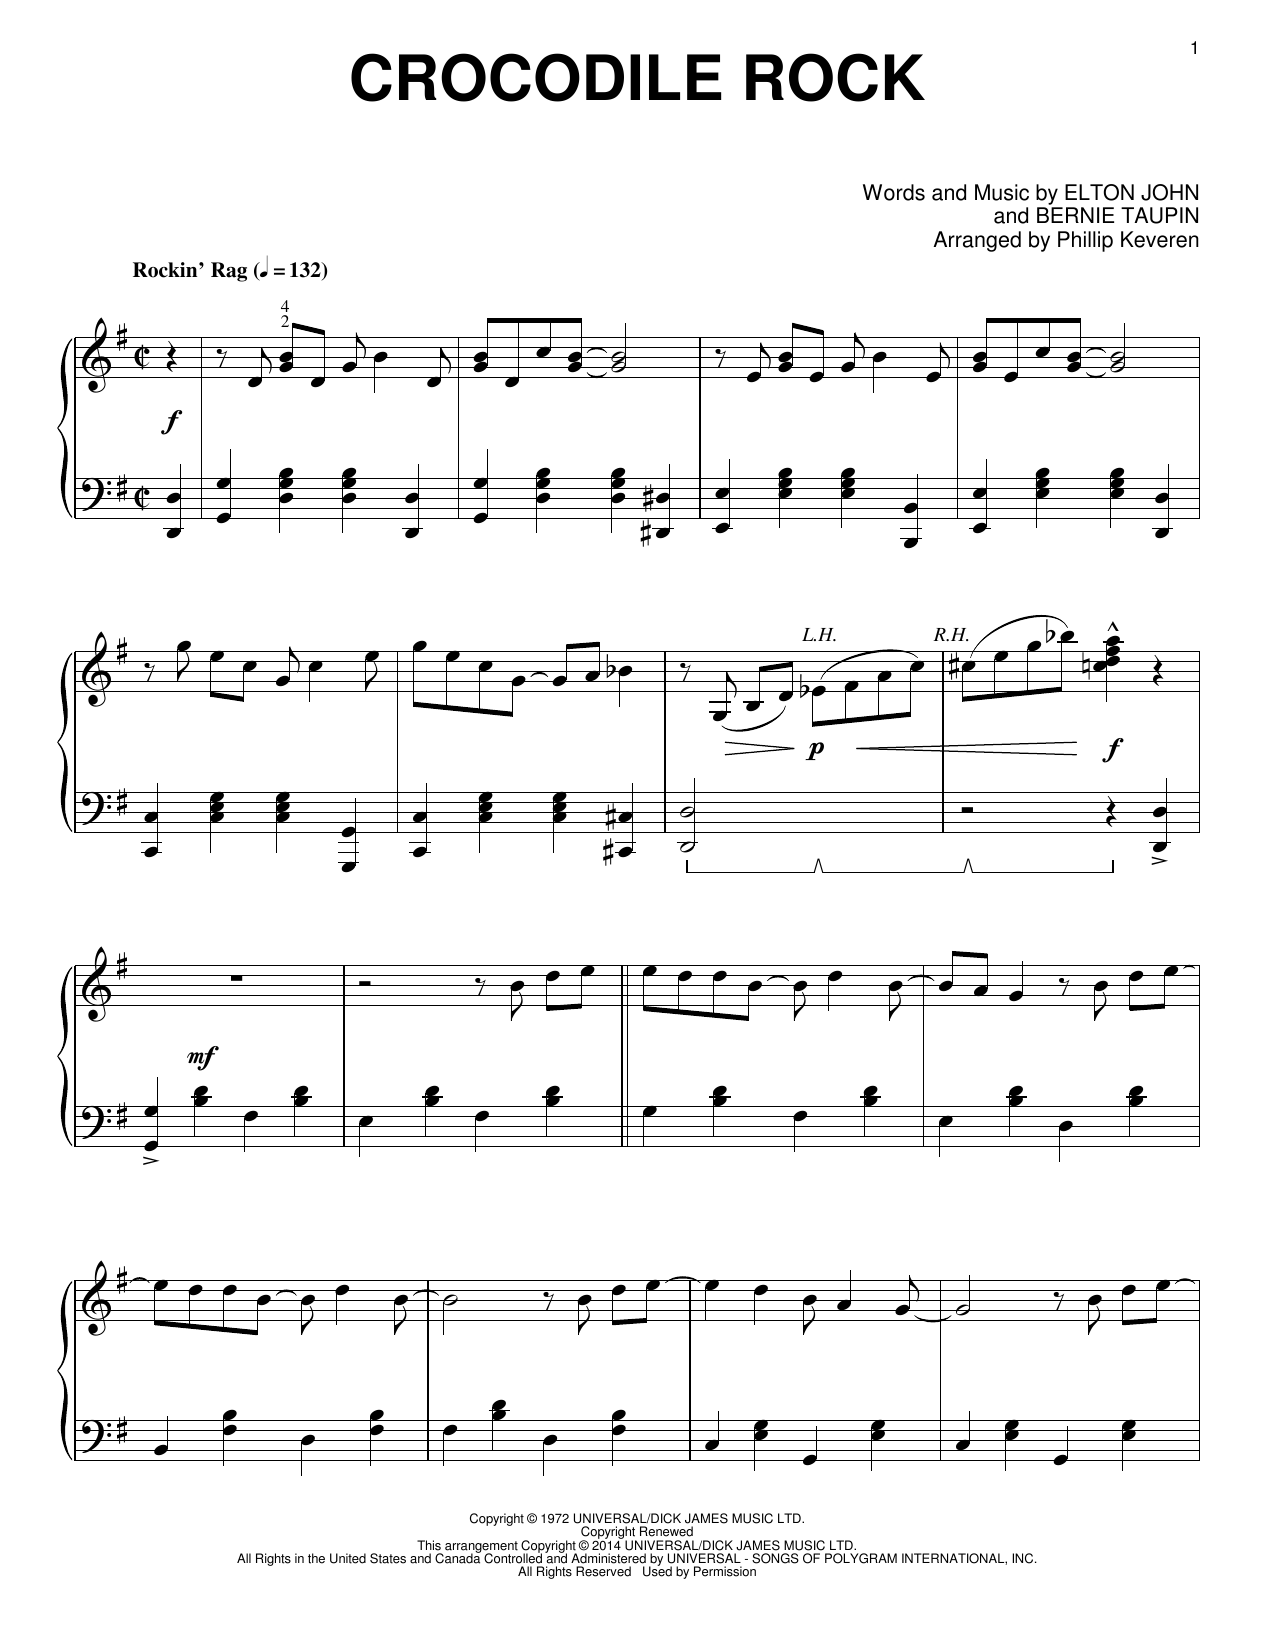 Elton John Crocodile Rock [Classical version] (arr. Phillip Keveren) Sheet Music Notes & Chords for Piano - Download or Print PDF